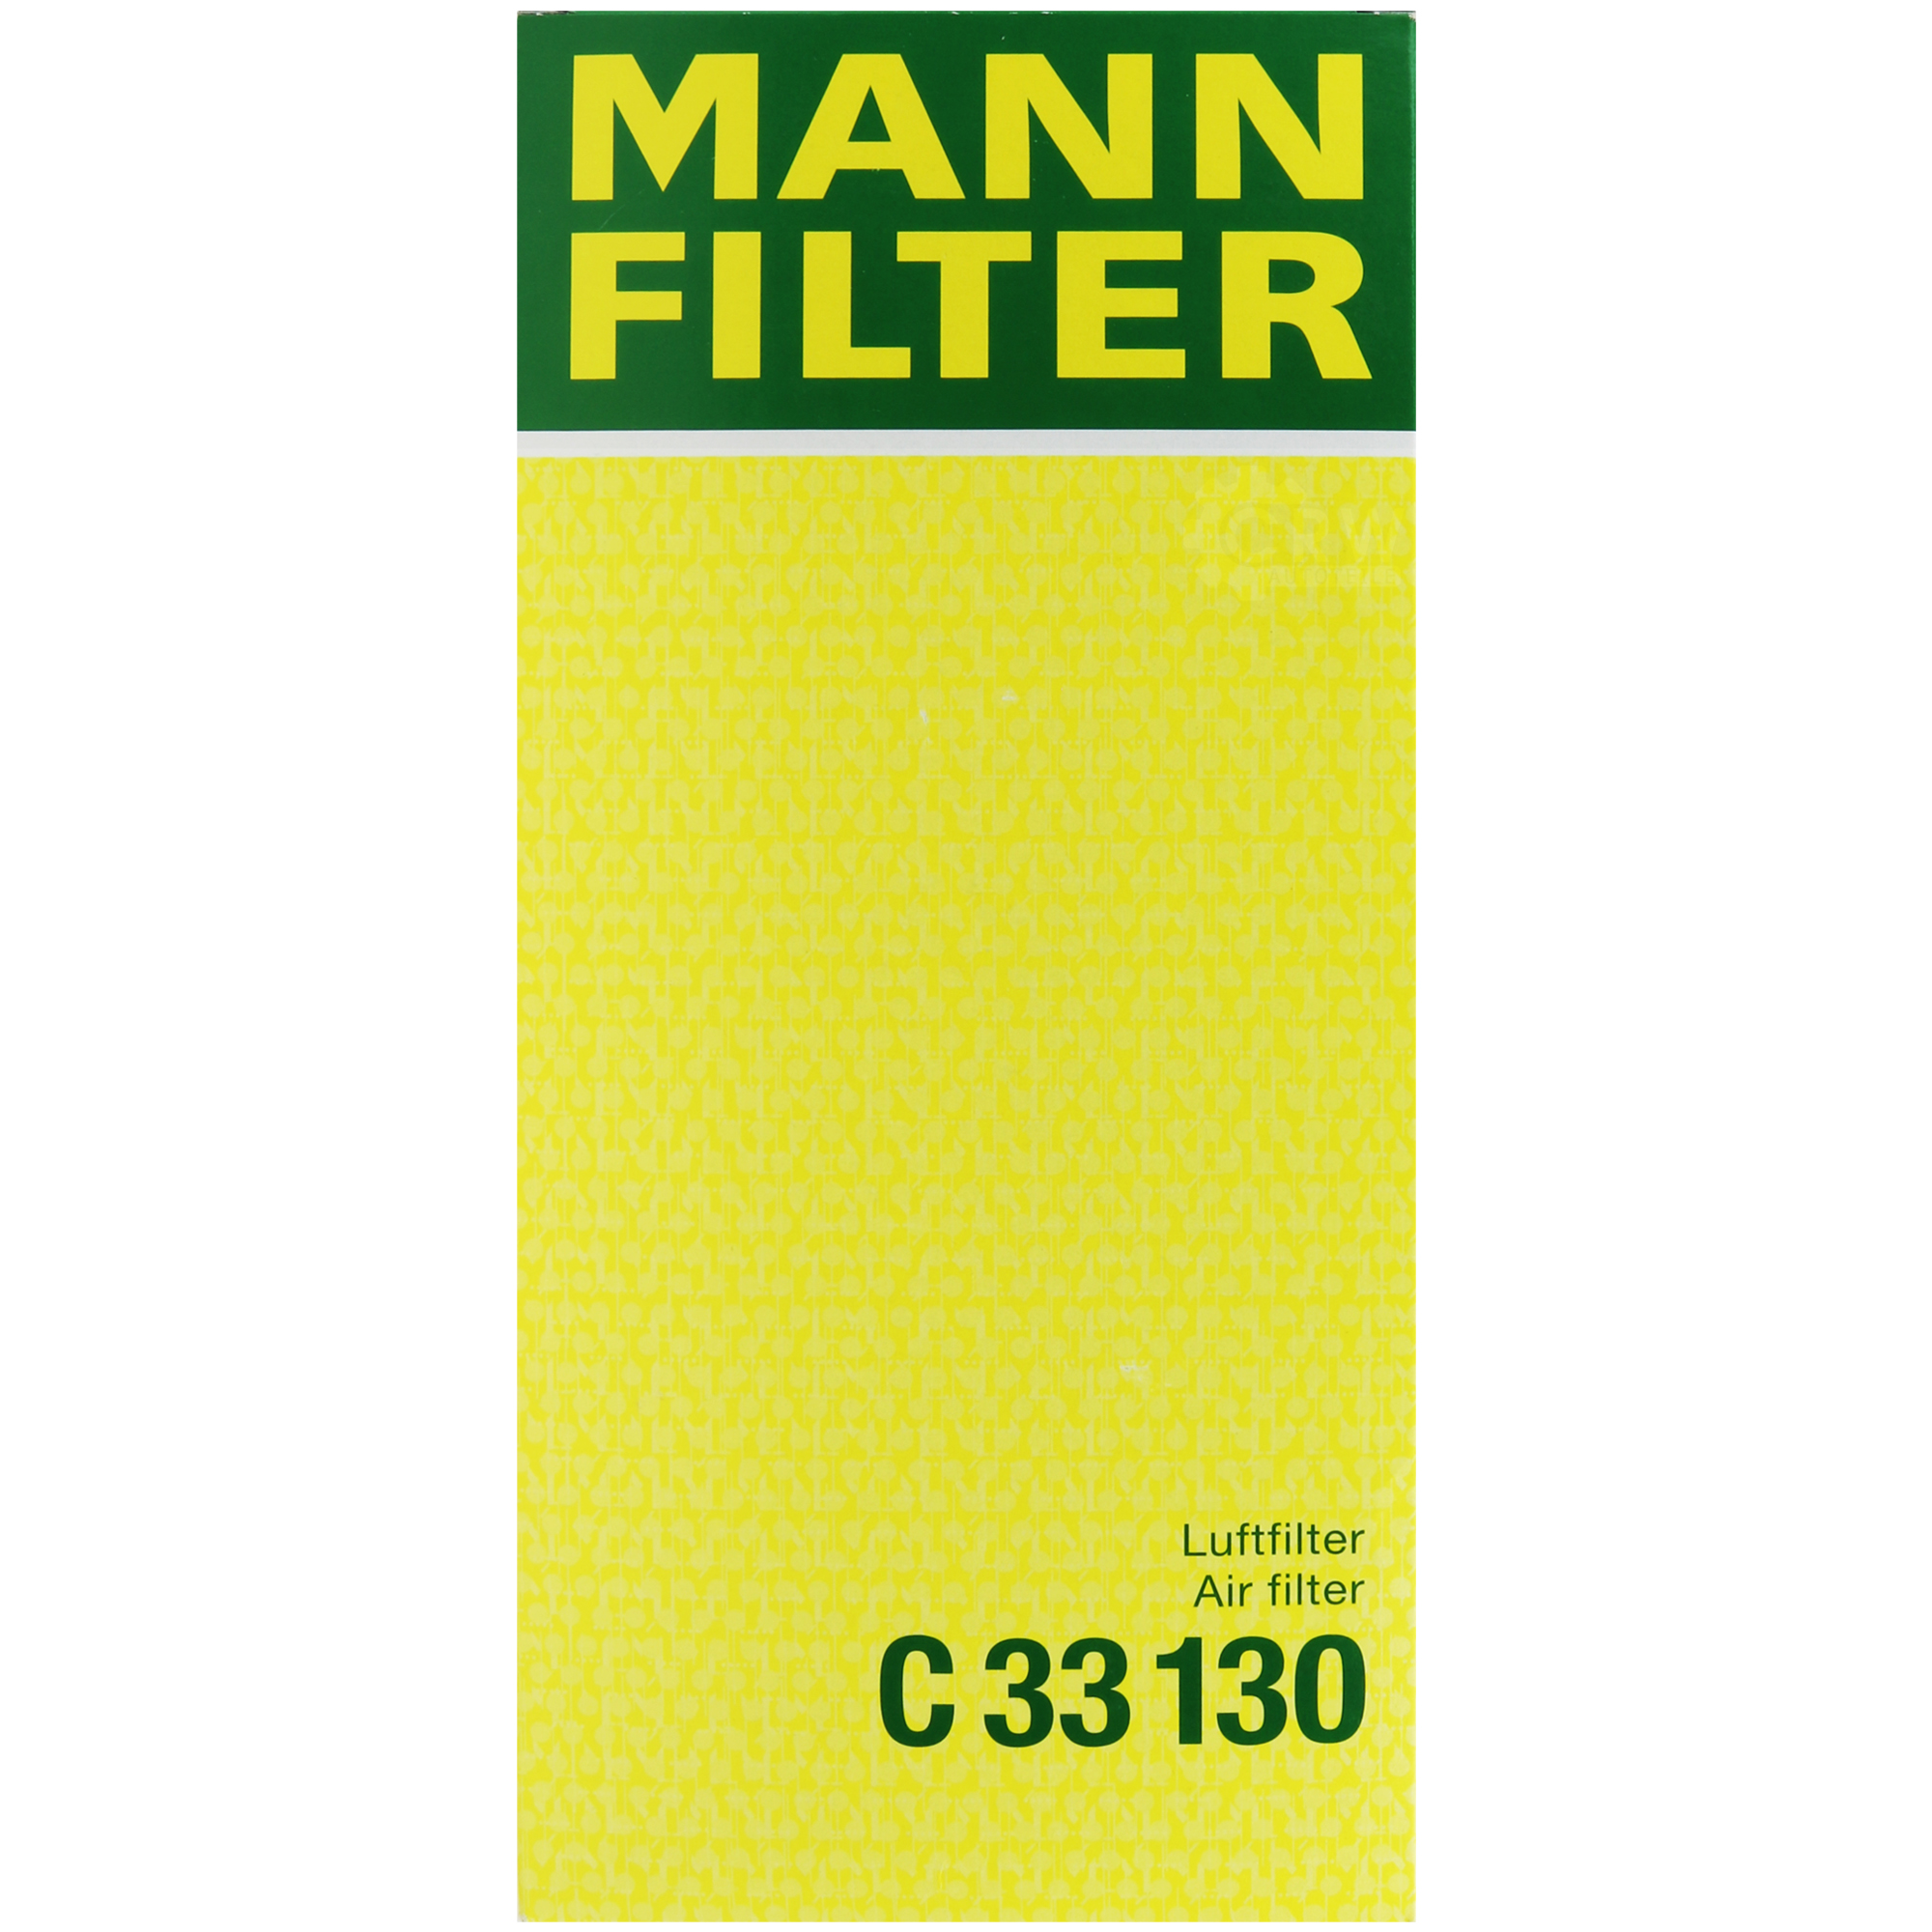 MANN-FILTER Luftfilter für BMW 5er E34 520i 24V 525i Alpina B10 3.0 AWD